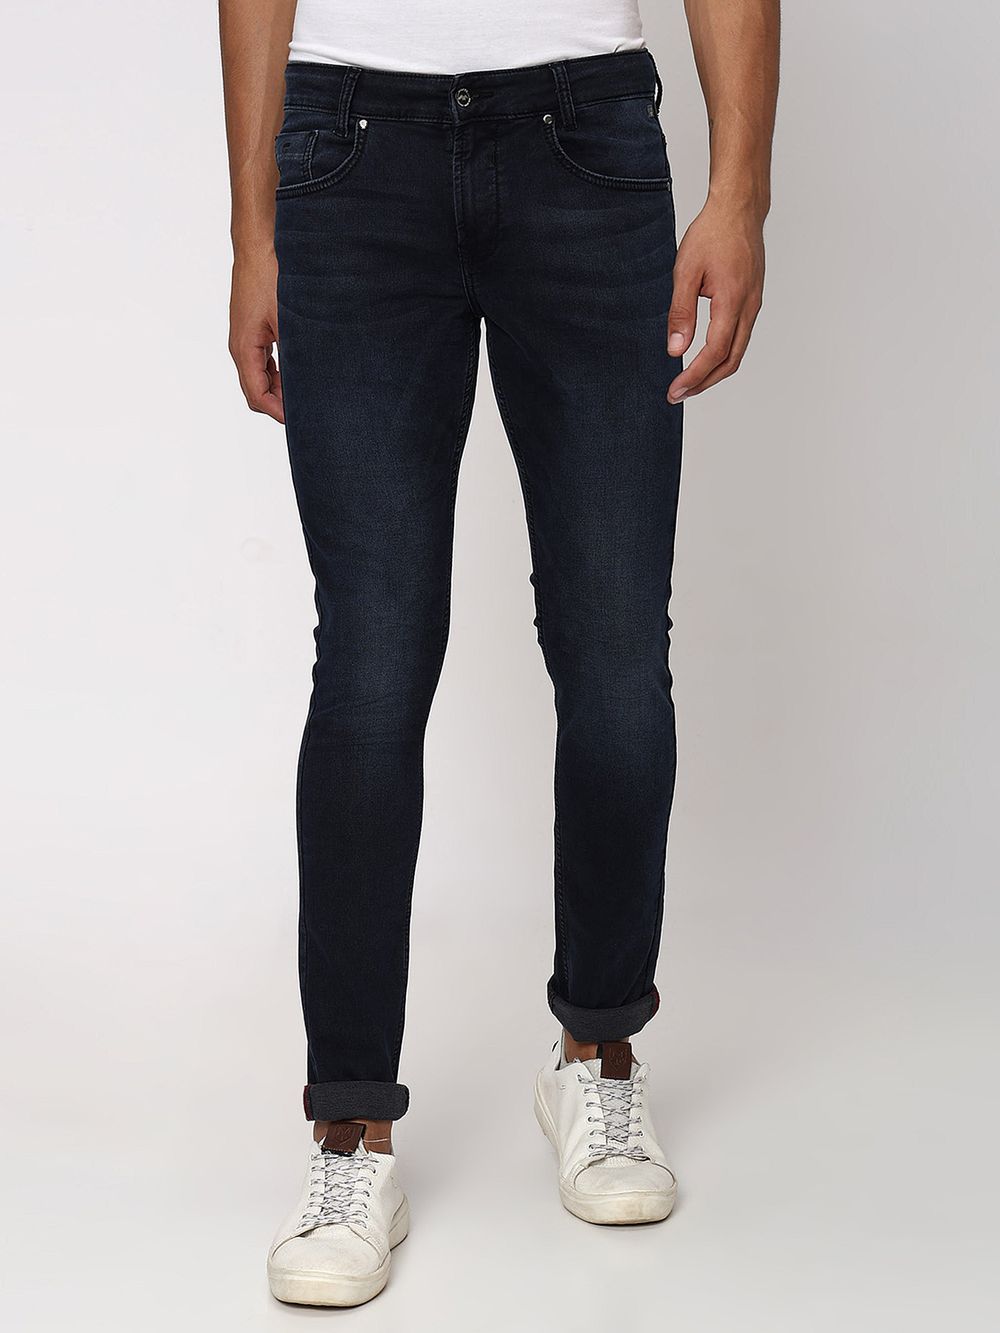 Blue Black Skinny Fit Denim Deluxe Stretch Jeans